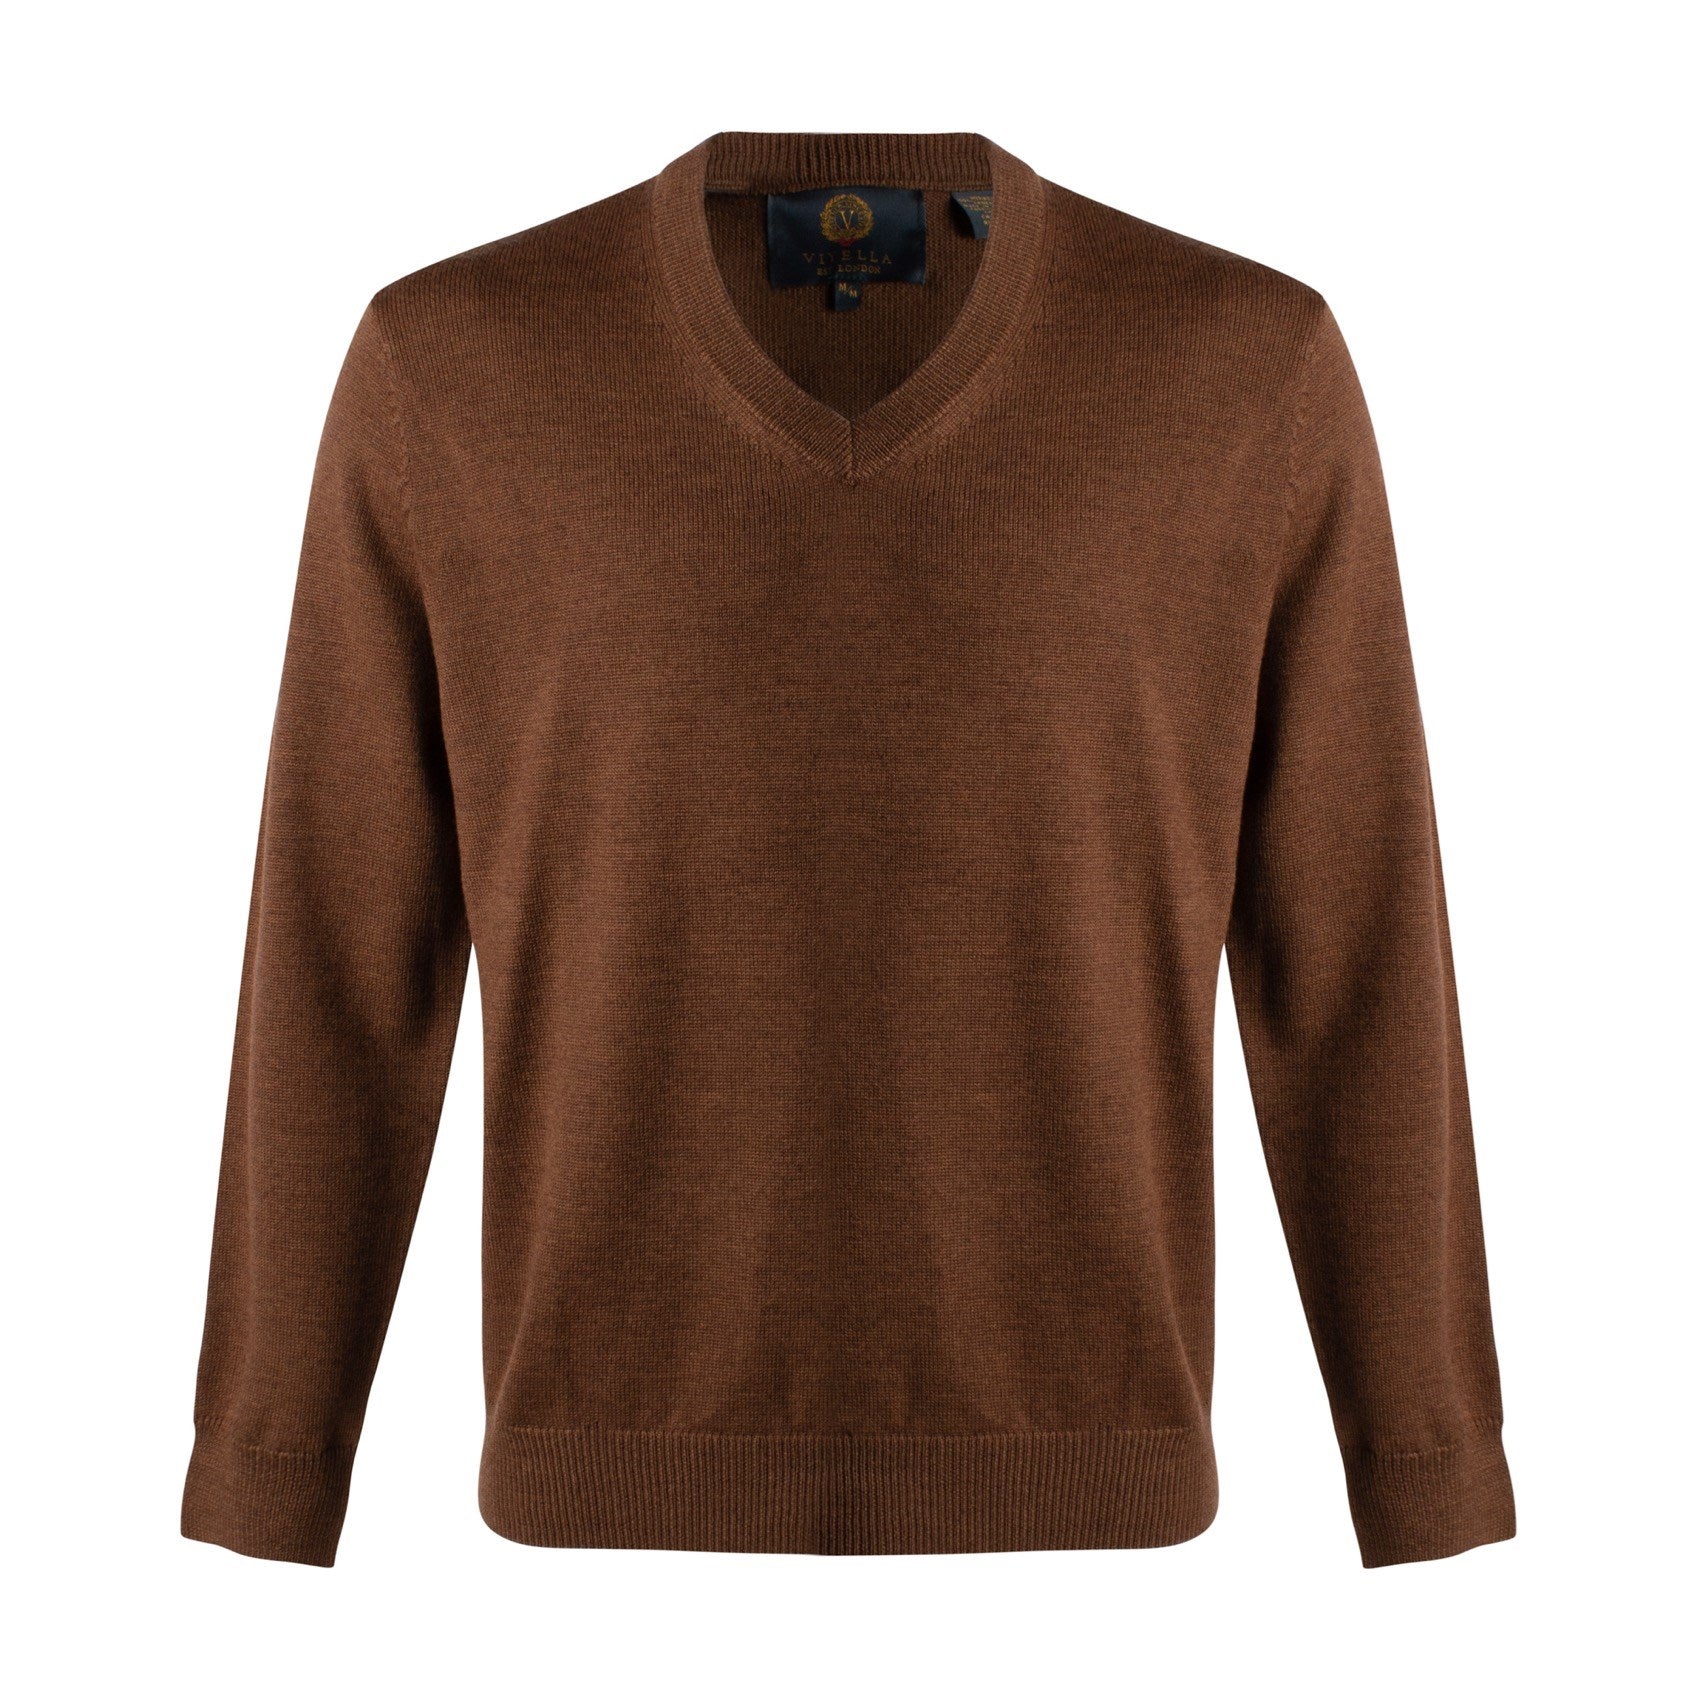 Extra Fine 'Zegna Baruffa' Merino Wool V-Neck Sweater in Brown Melange by Viyella